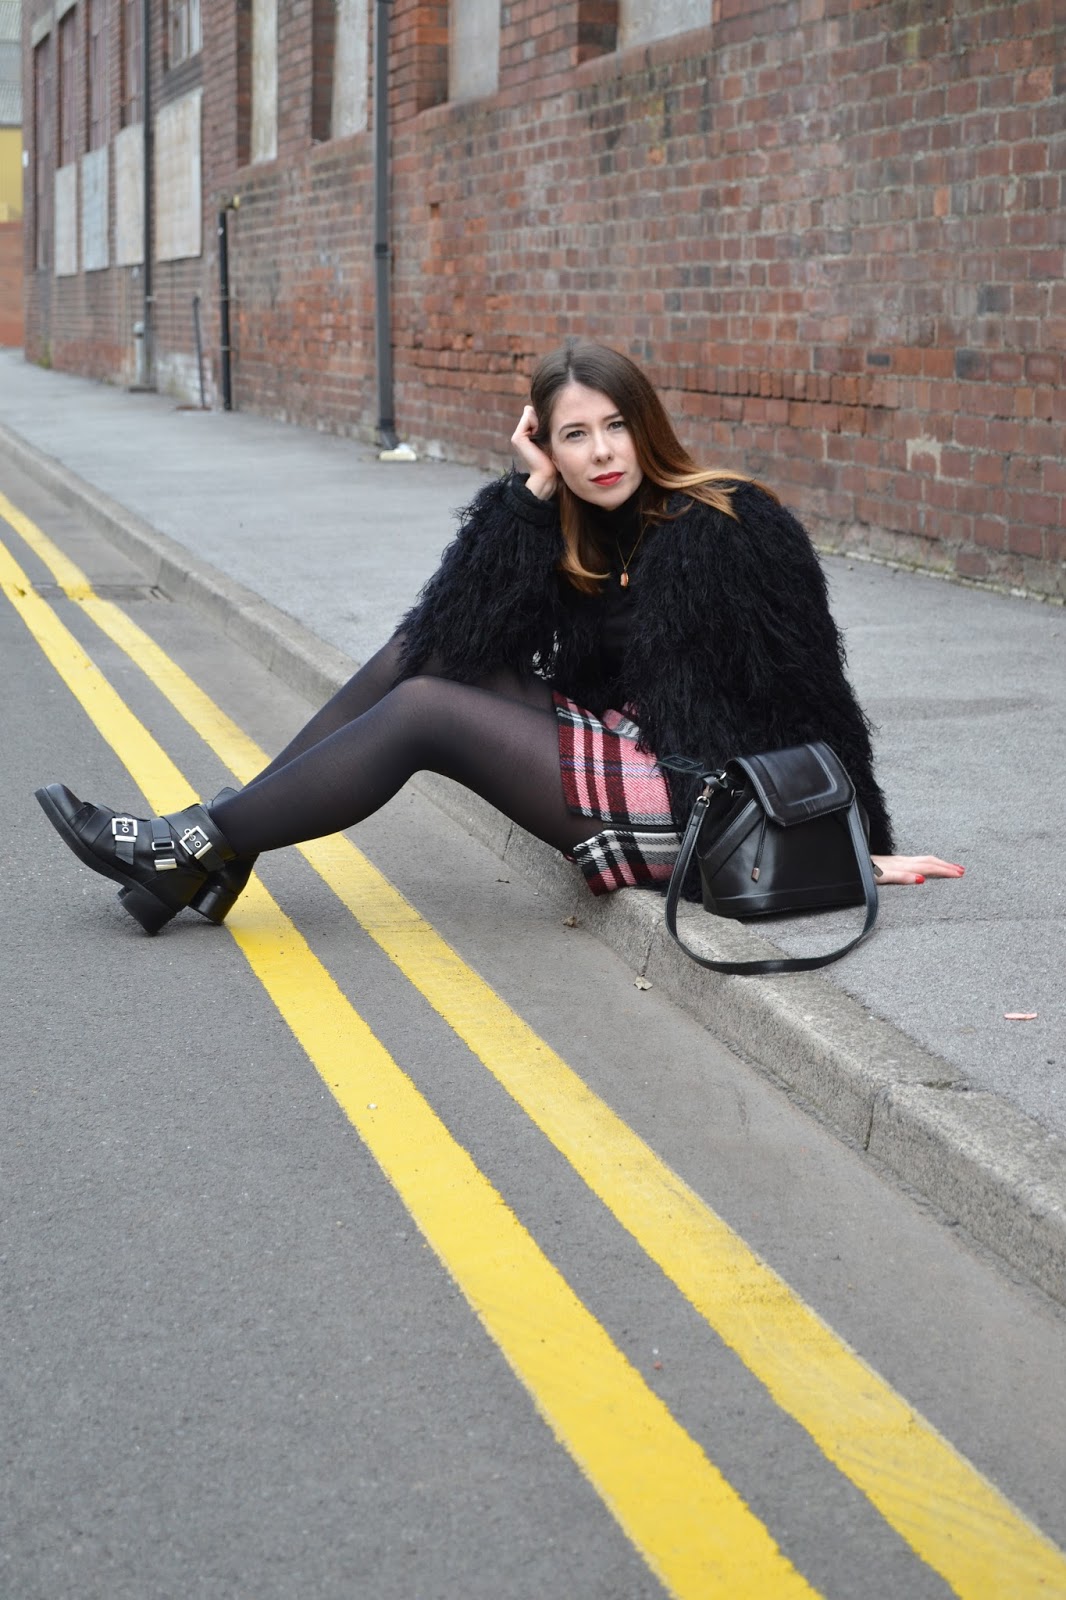 womens affordable highstreet fashion blog featuring British street style. Black polo neck. Topshop tartan skirt. Leather black buckle boots from Kurt Geiger. Black shabby jacket. Hollies closet